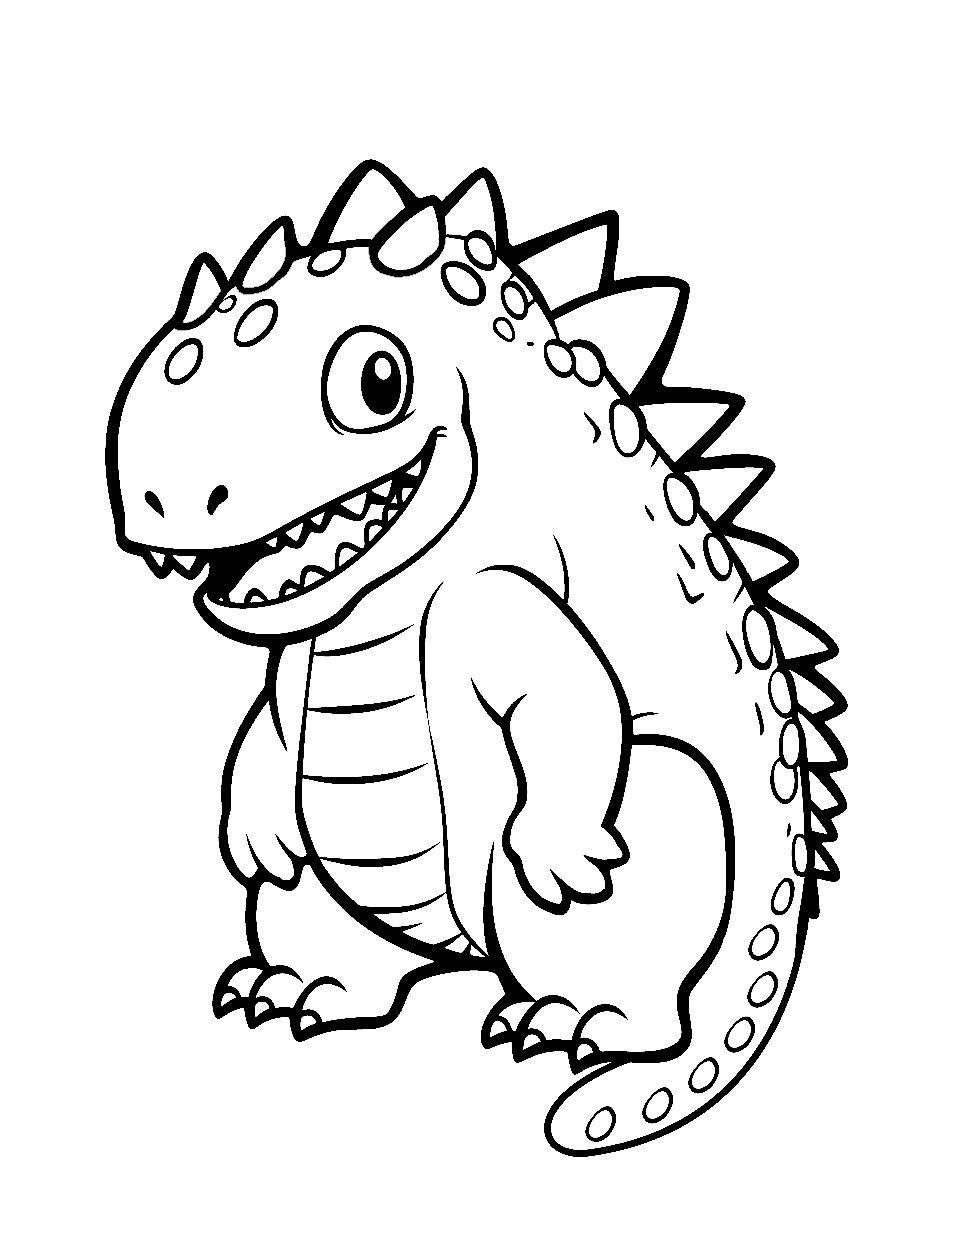 Cute Baby Godzilla Coloring Page - A chibi or cartoon version of Godzilla, with big eyes and a tiny tail.